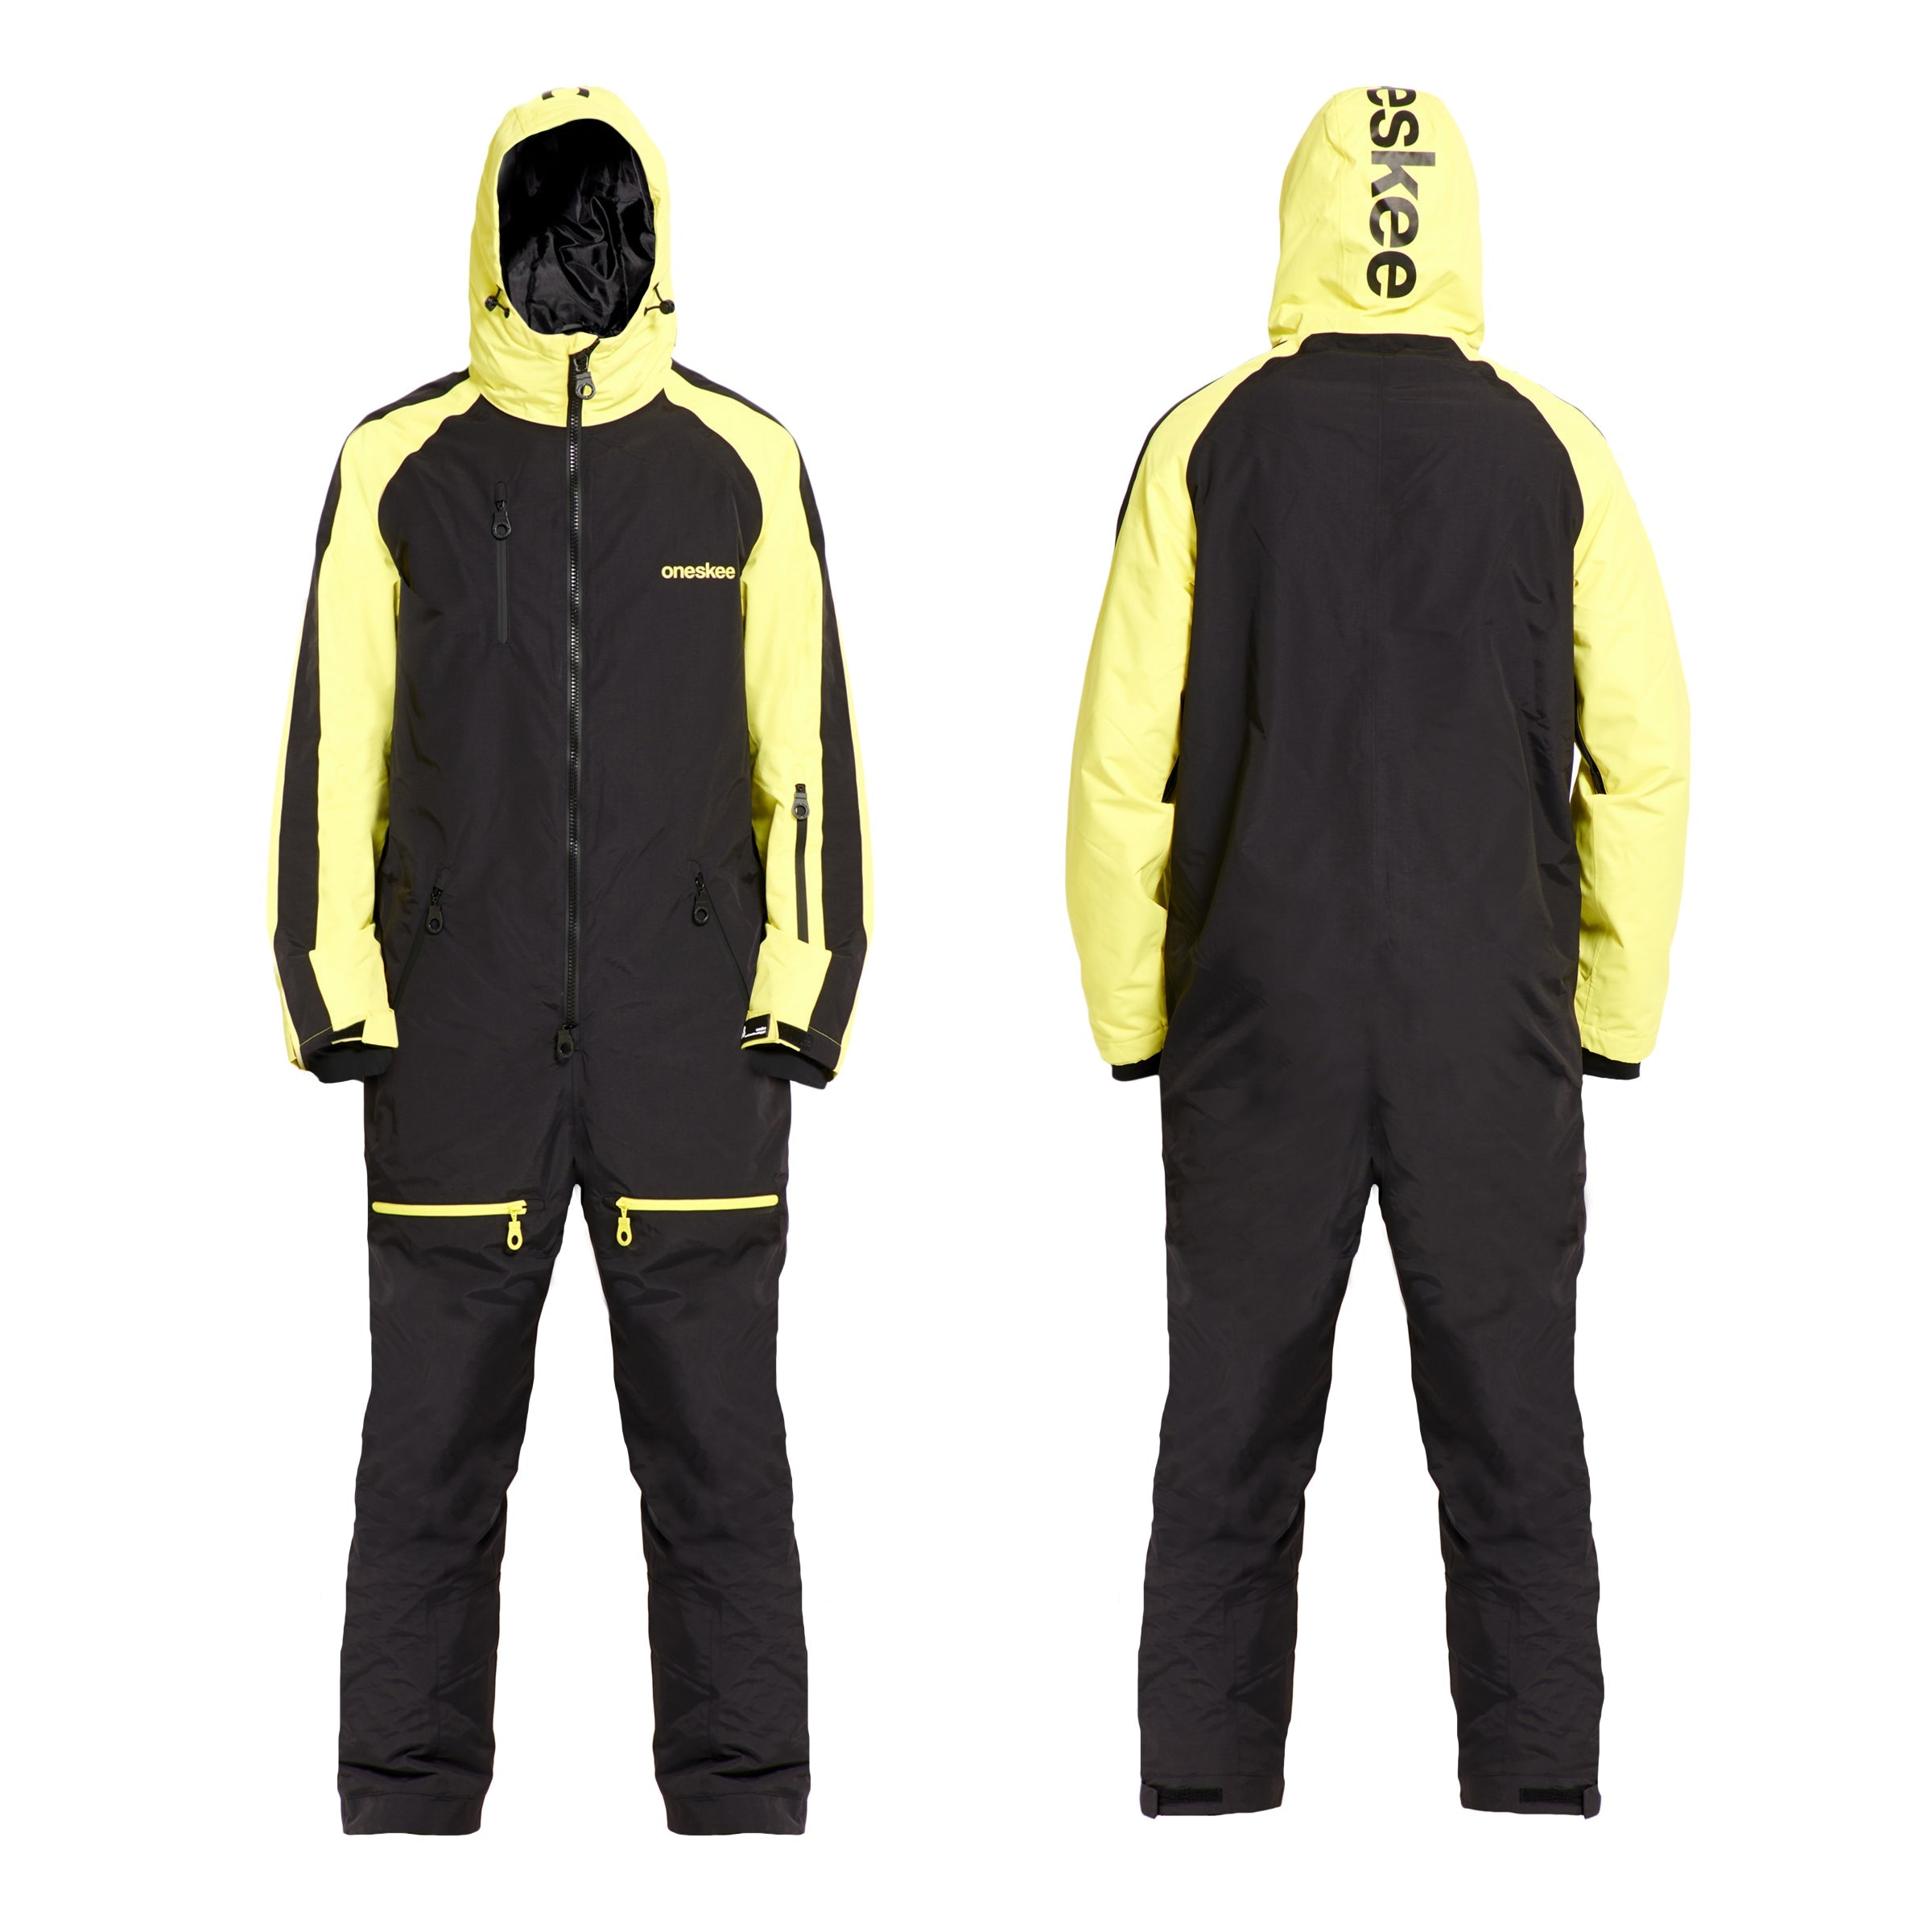 Men's Snow Suit, Black & Yellow